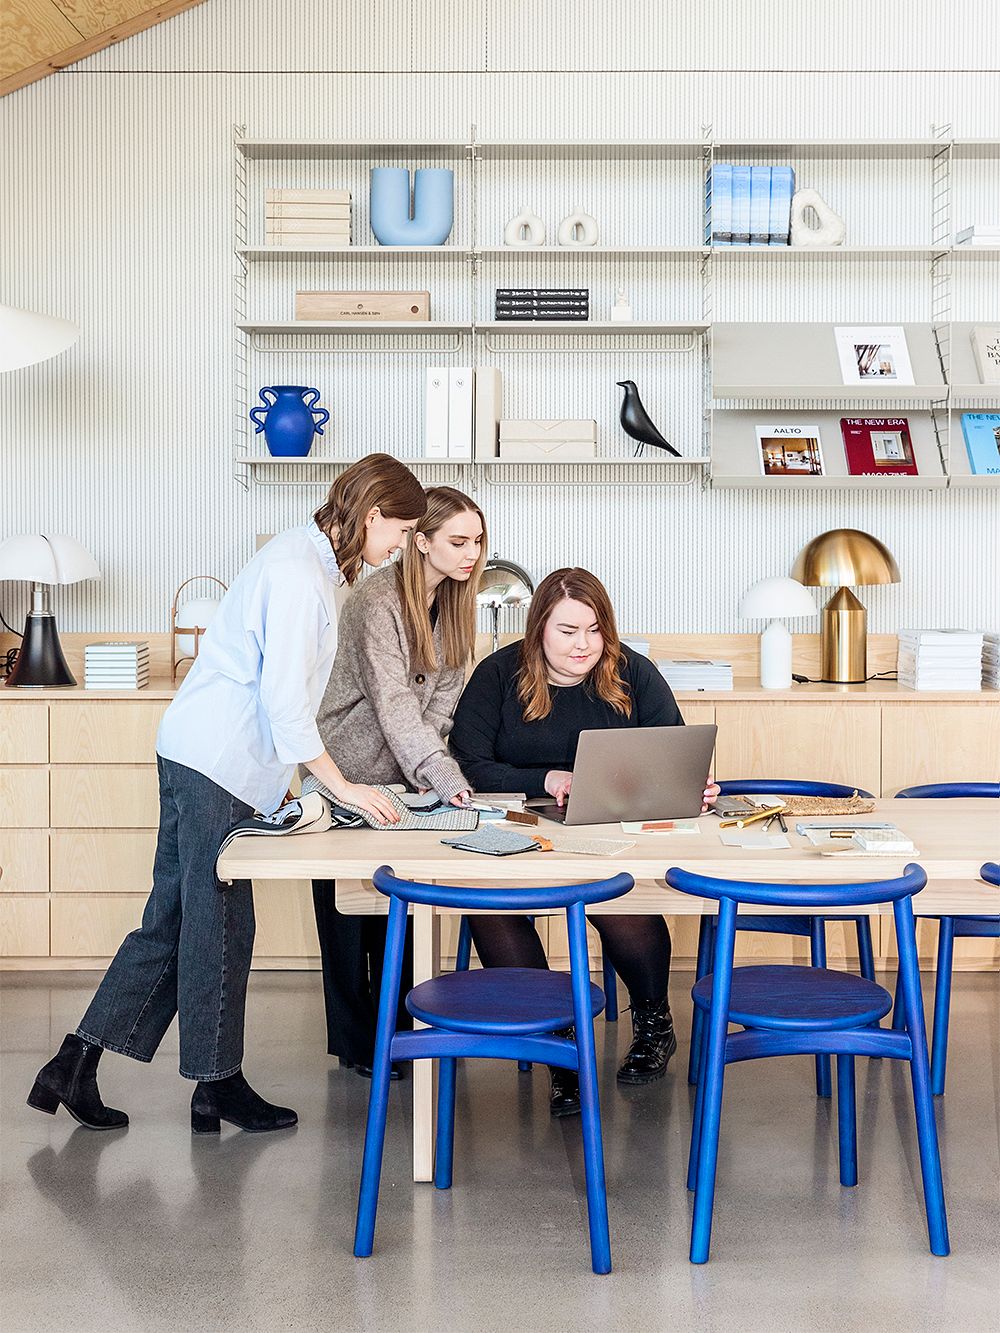 An image of Finnish Design Shop's interior design service team at Finnish Design Shop's showroom.